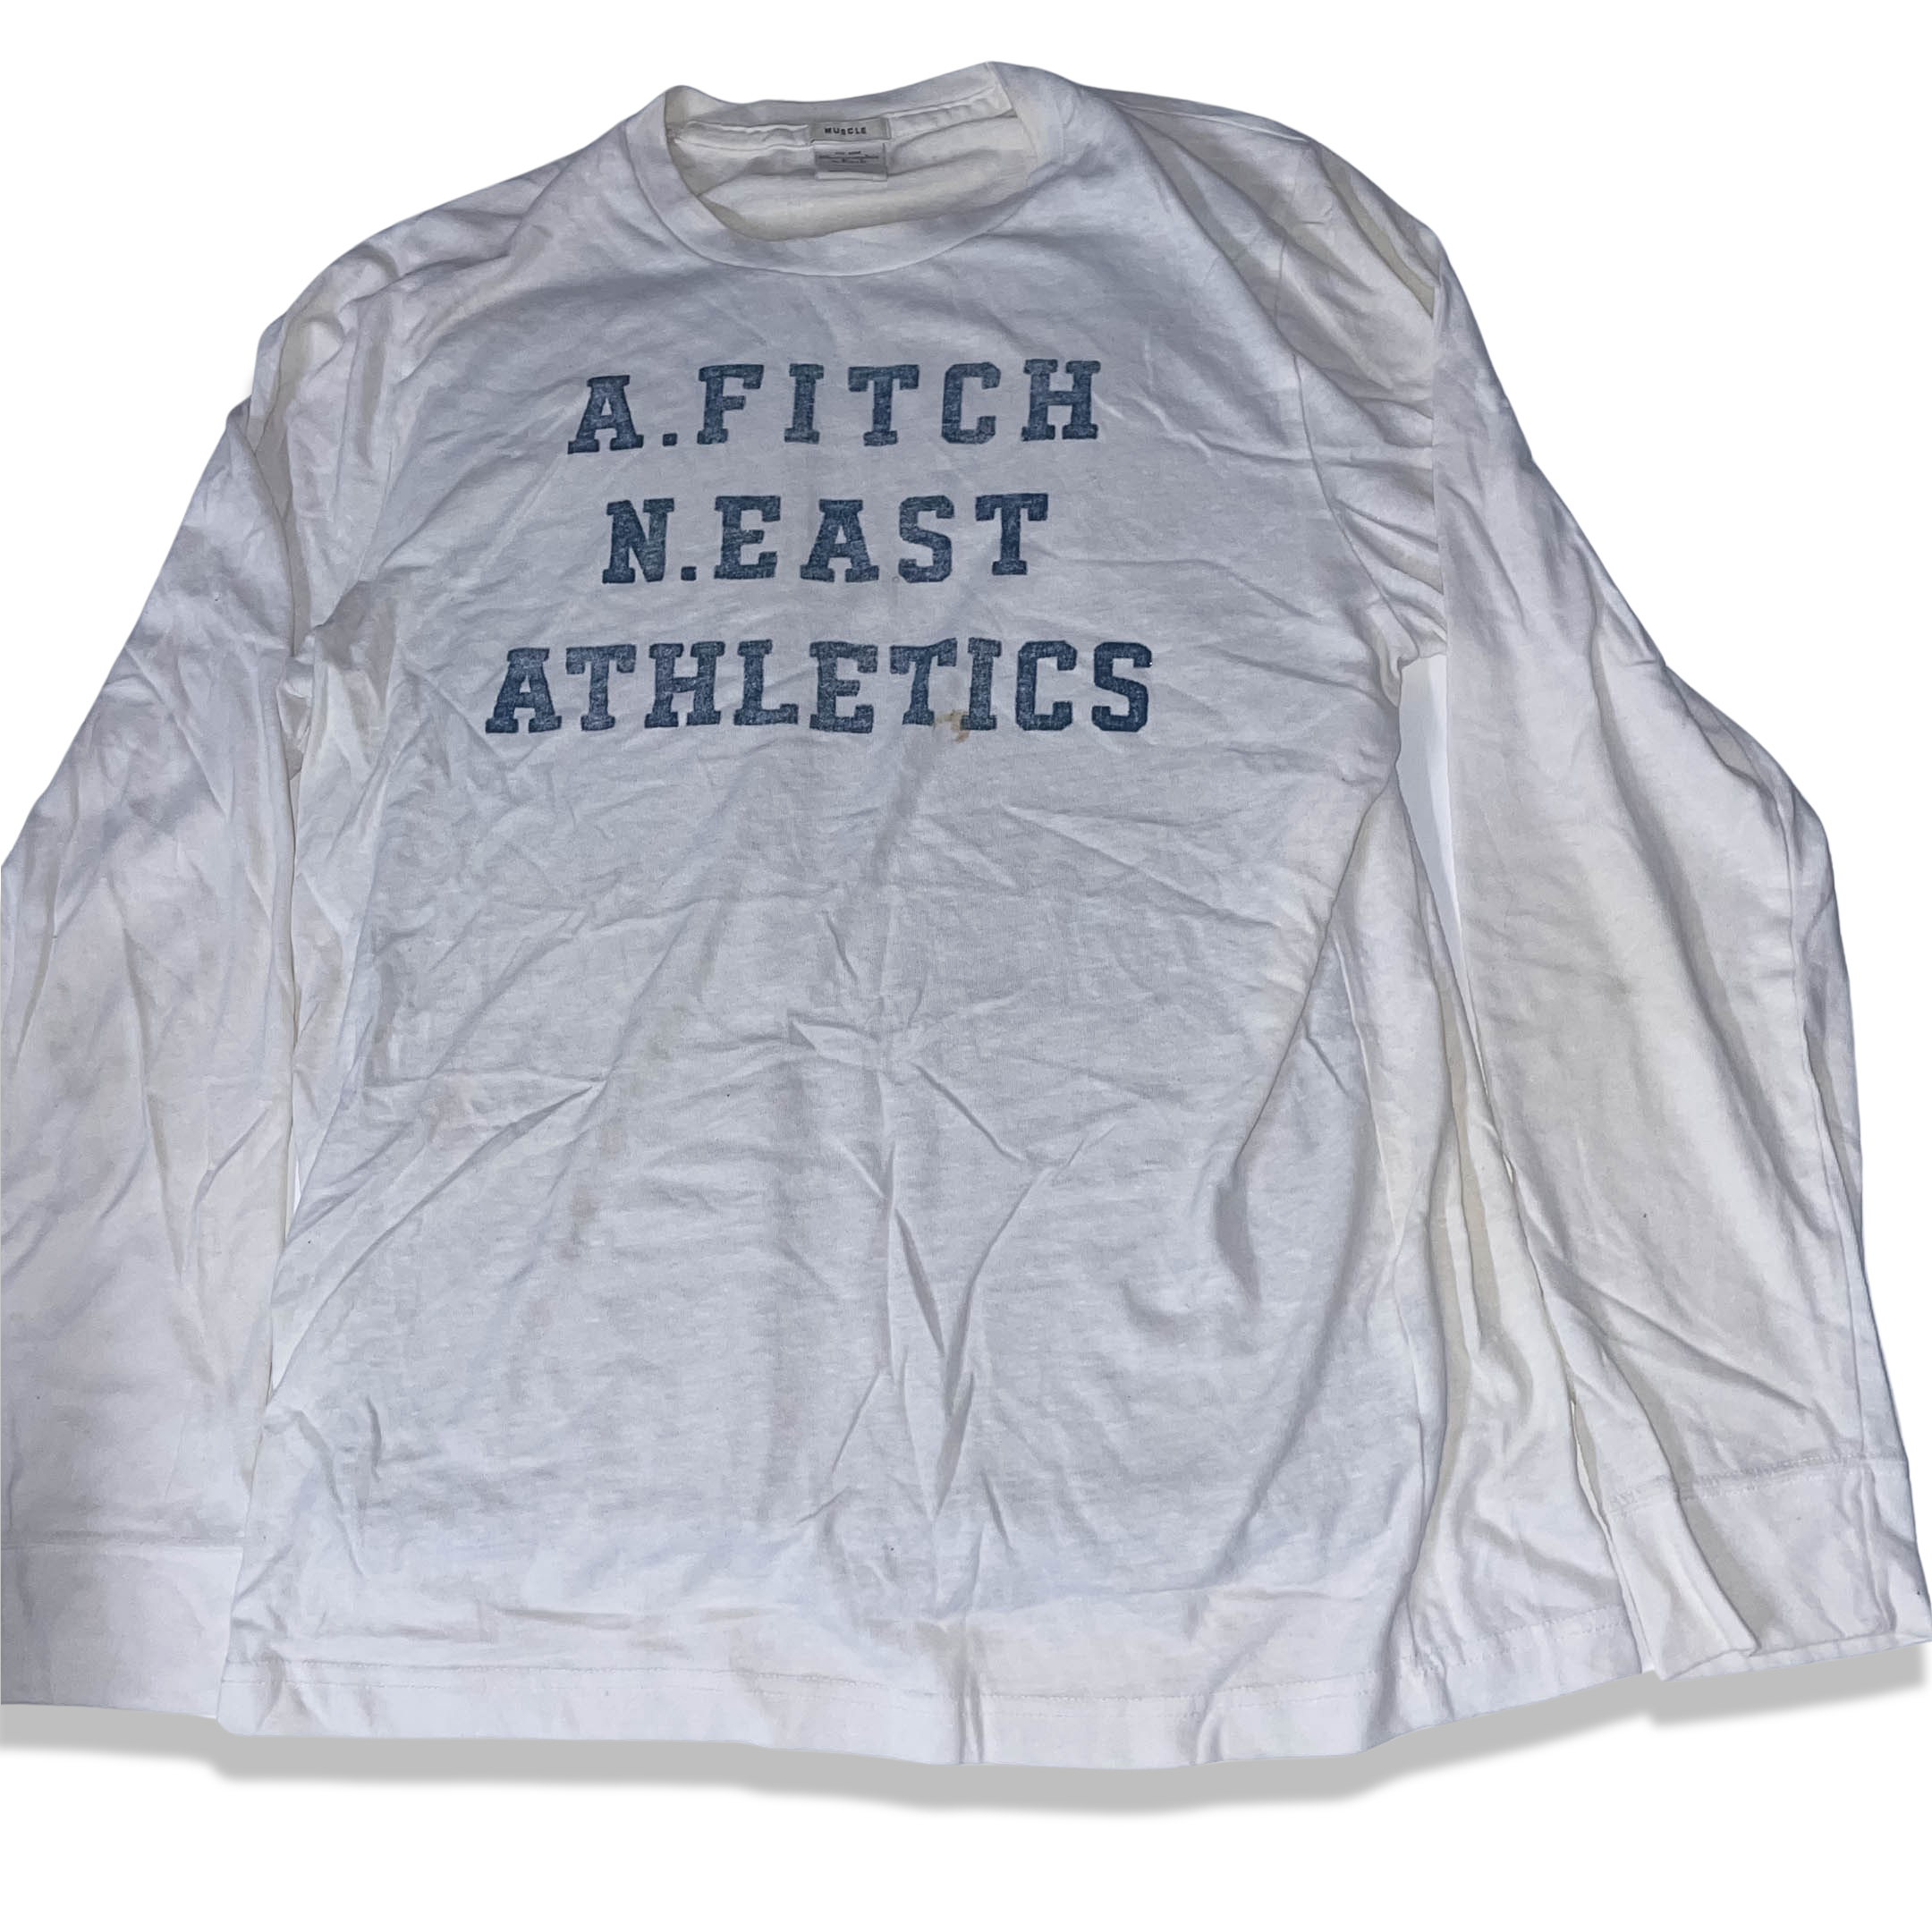 Vintage Abercrombie & Fitch N.East Athletics large white sweatshirt